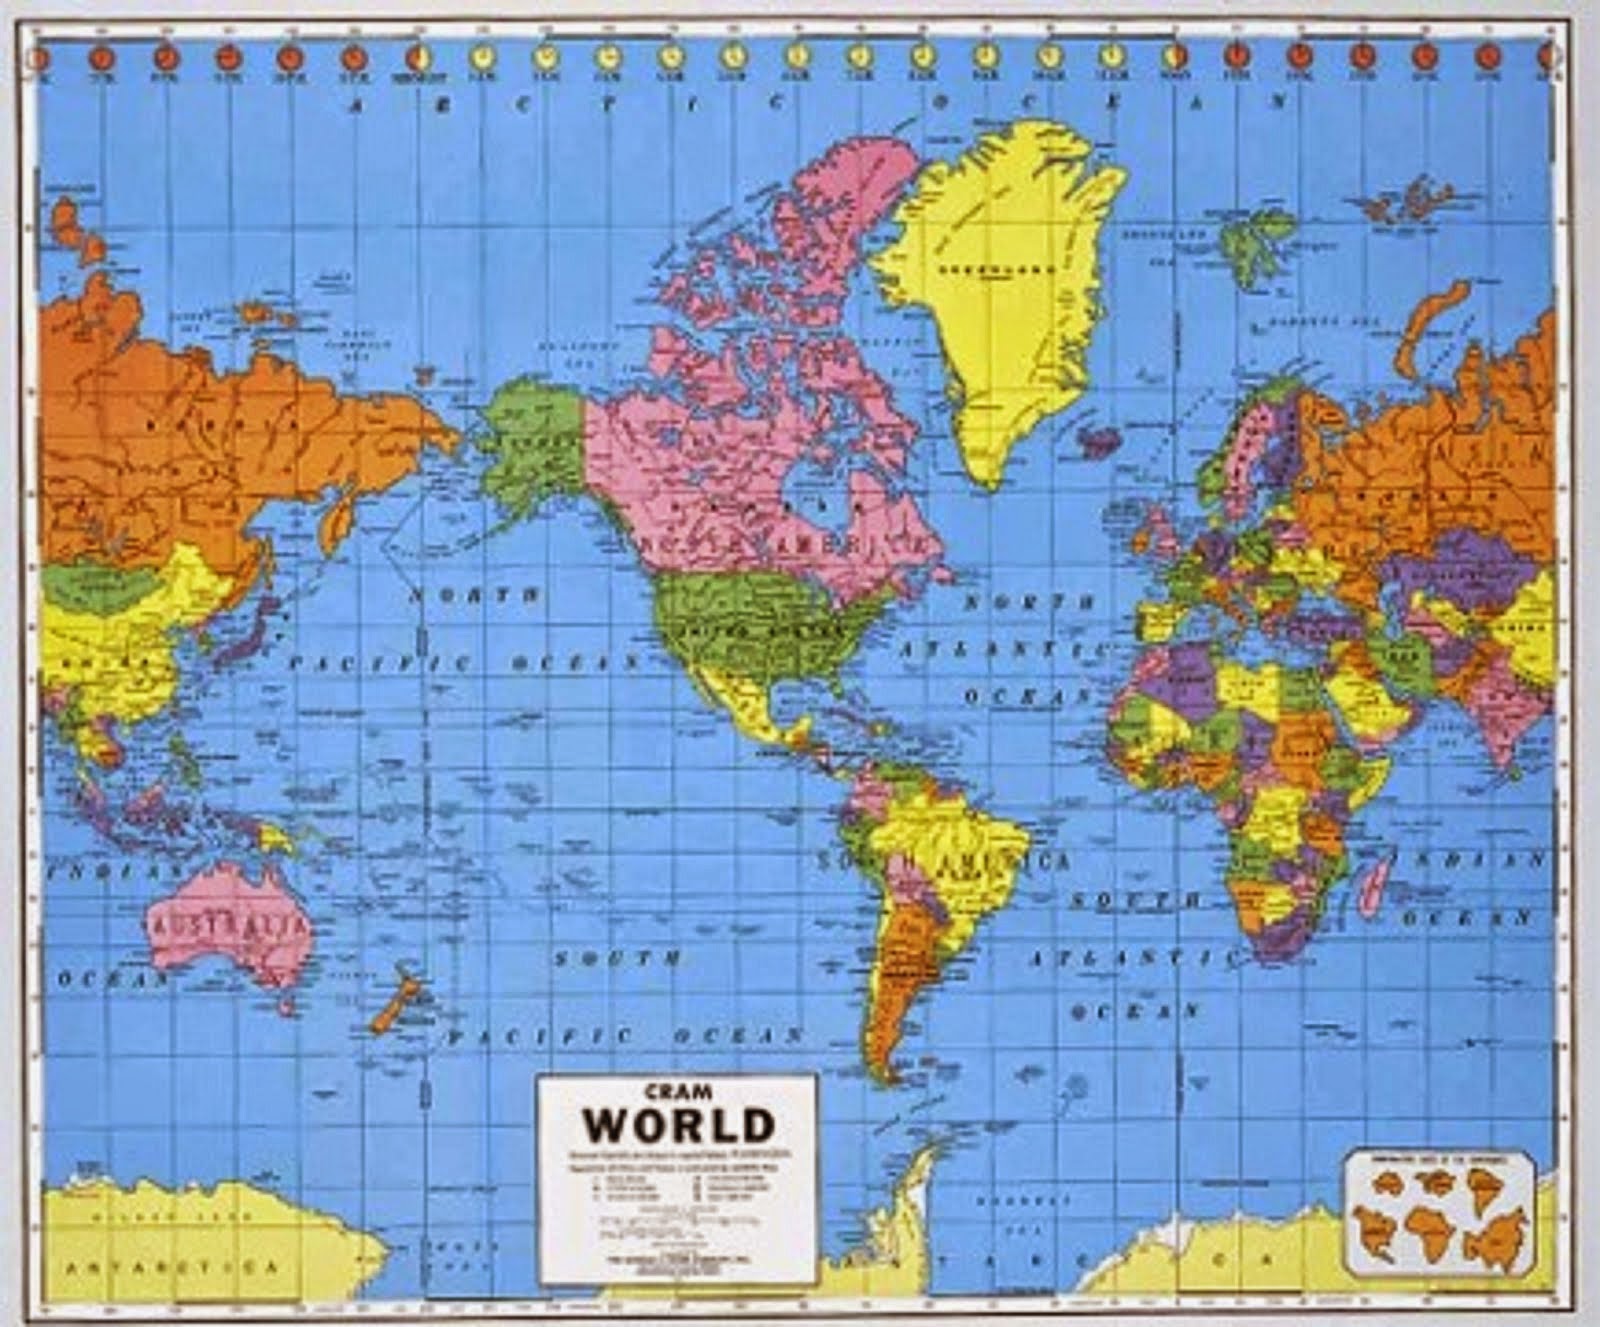 ABC - POLITICAL WORLD MAP